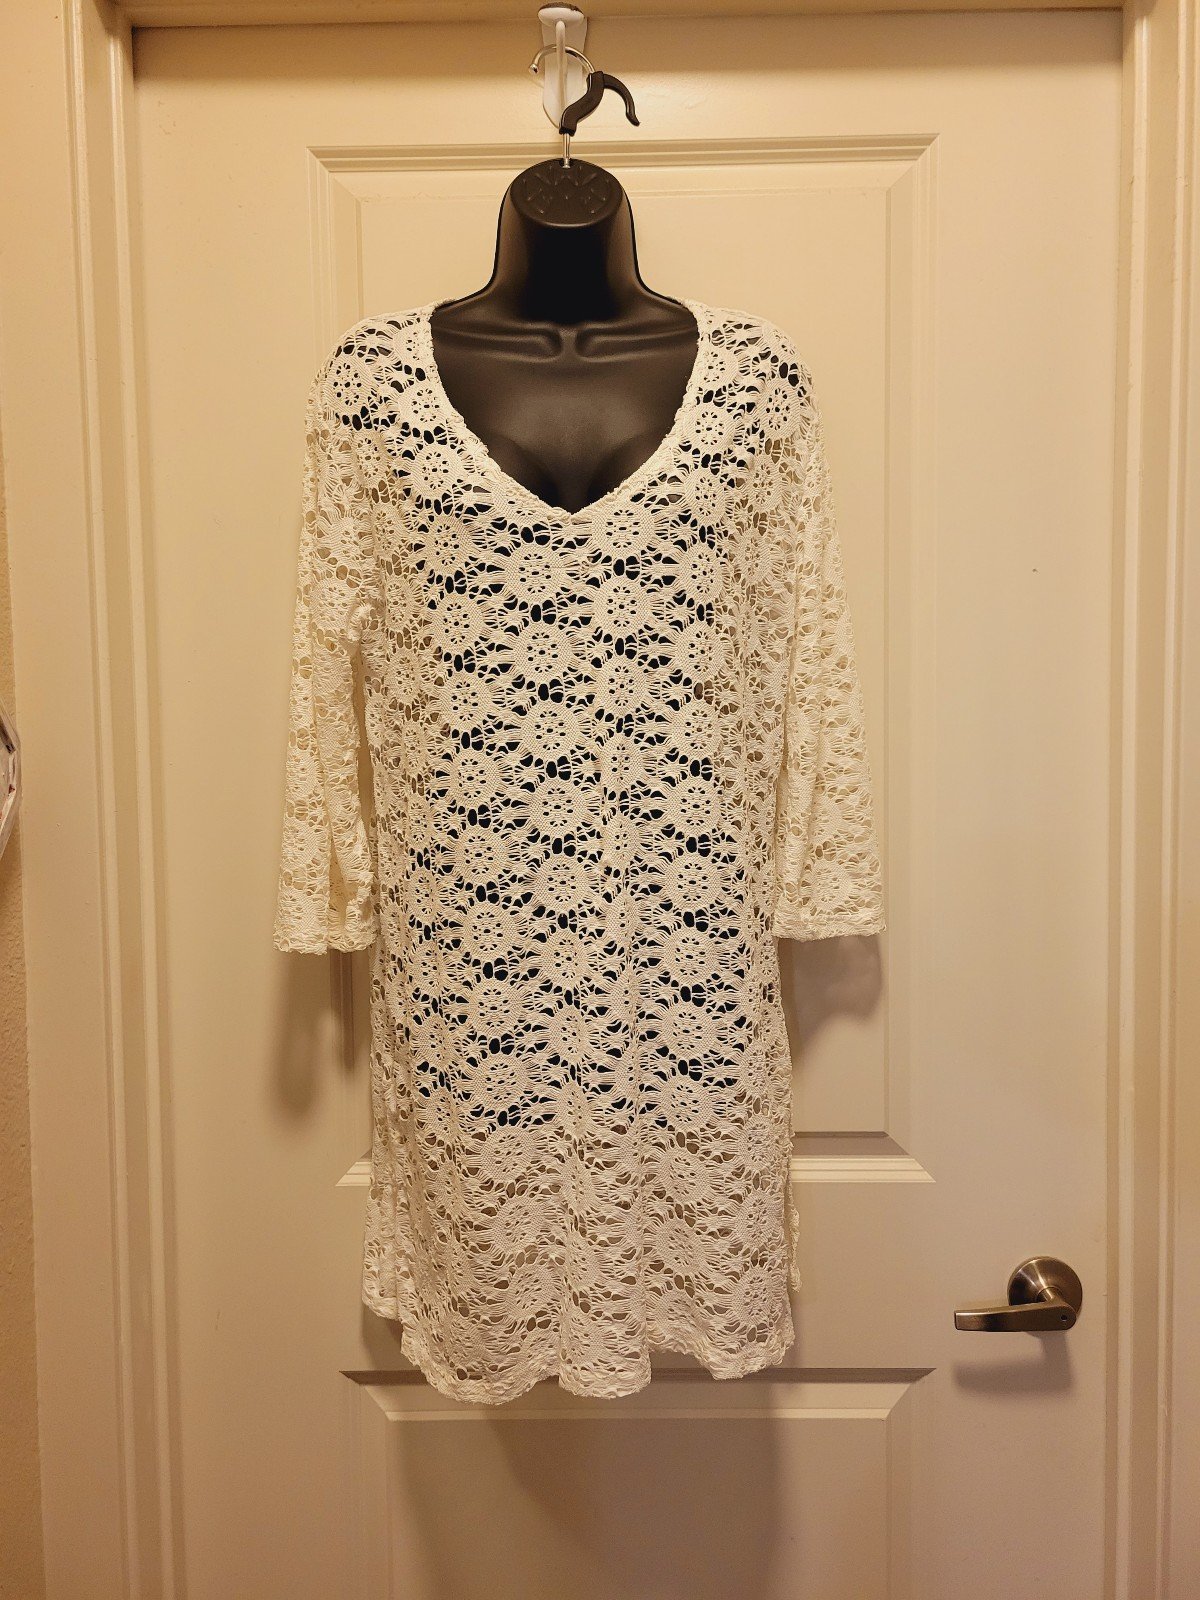 Classic White Crochet Cover Up nMdDzKOrK online store